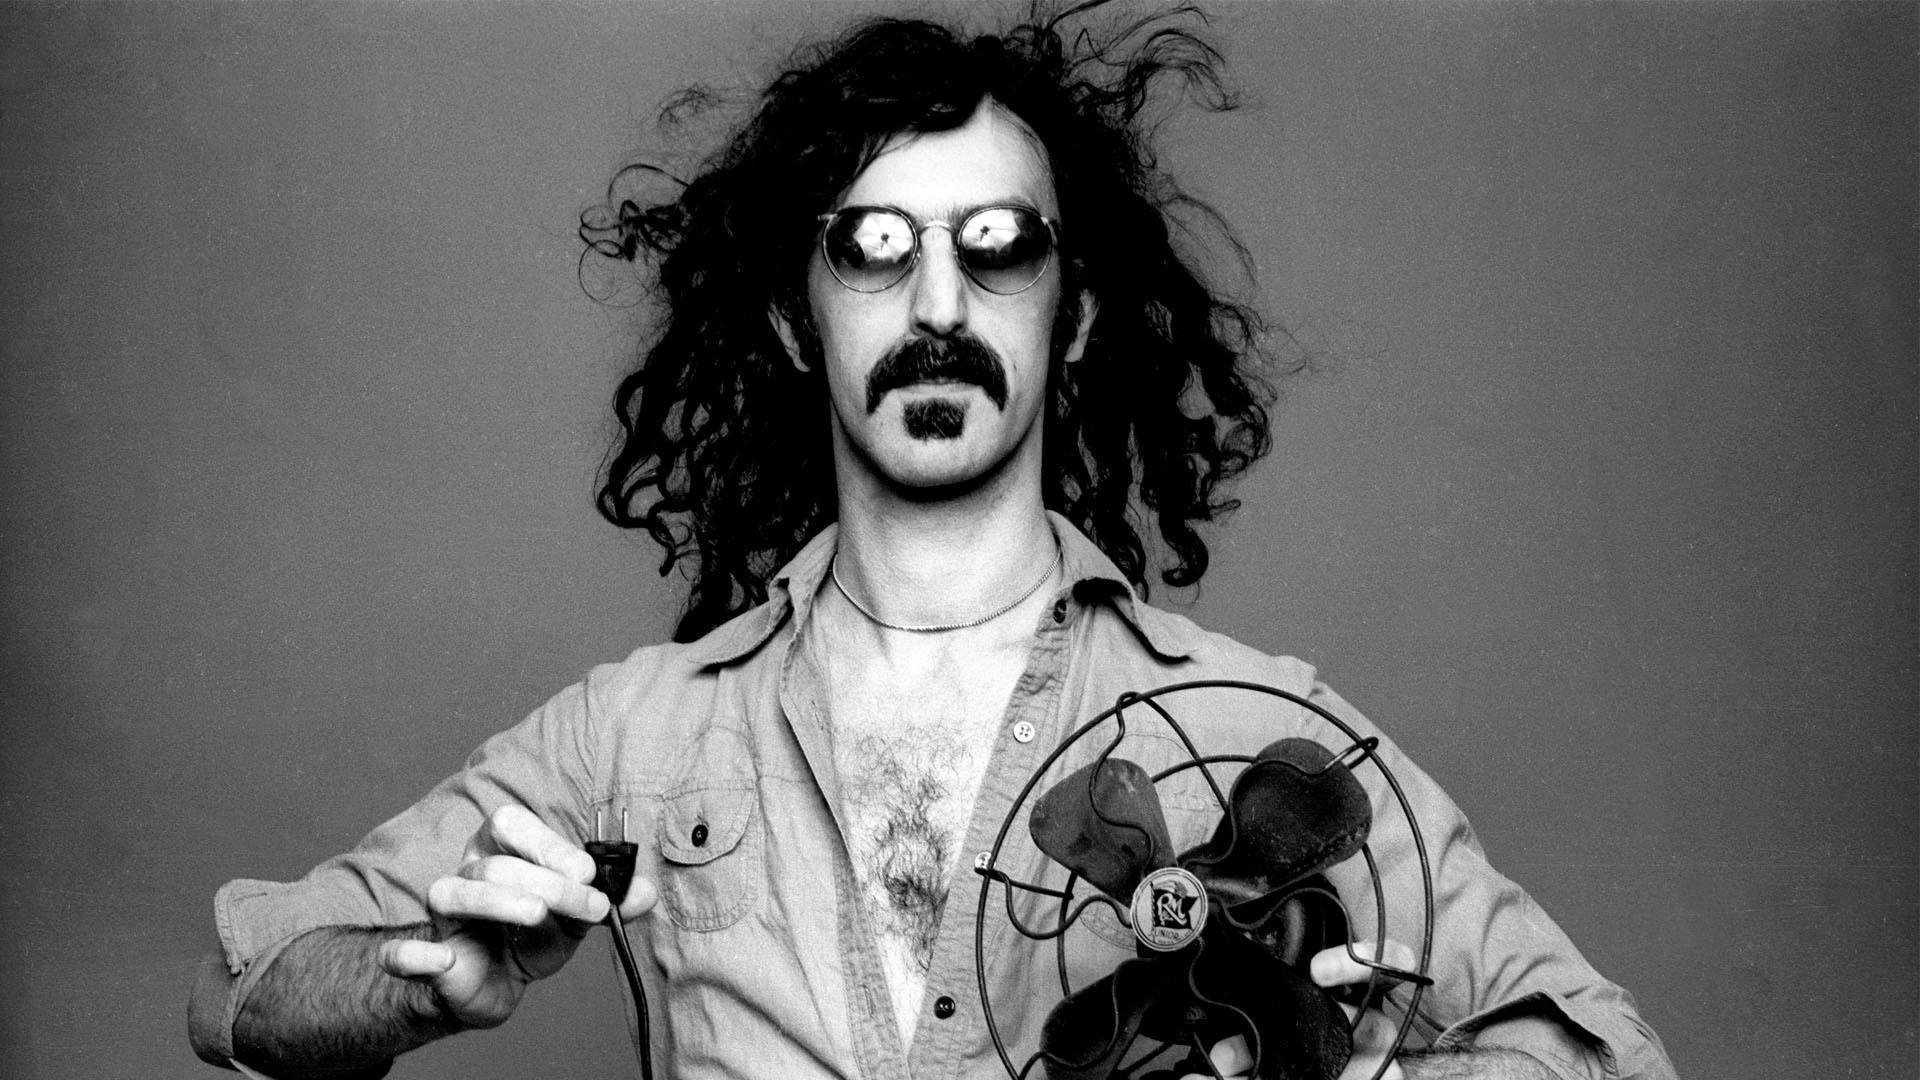 Frank Zappa, 1940 1993